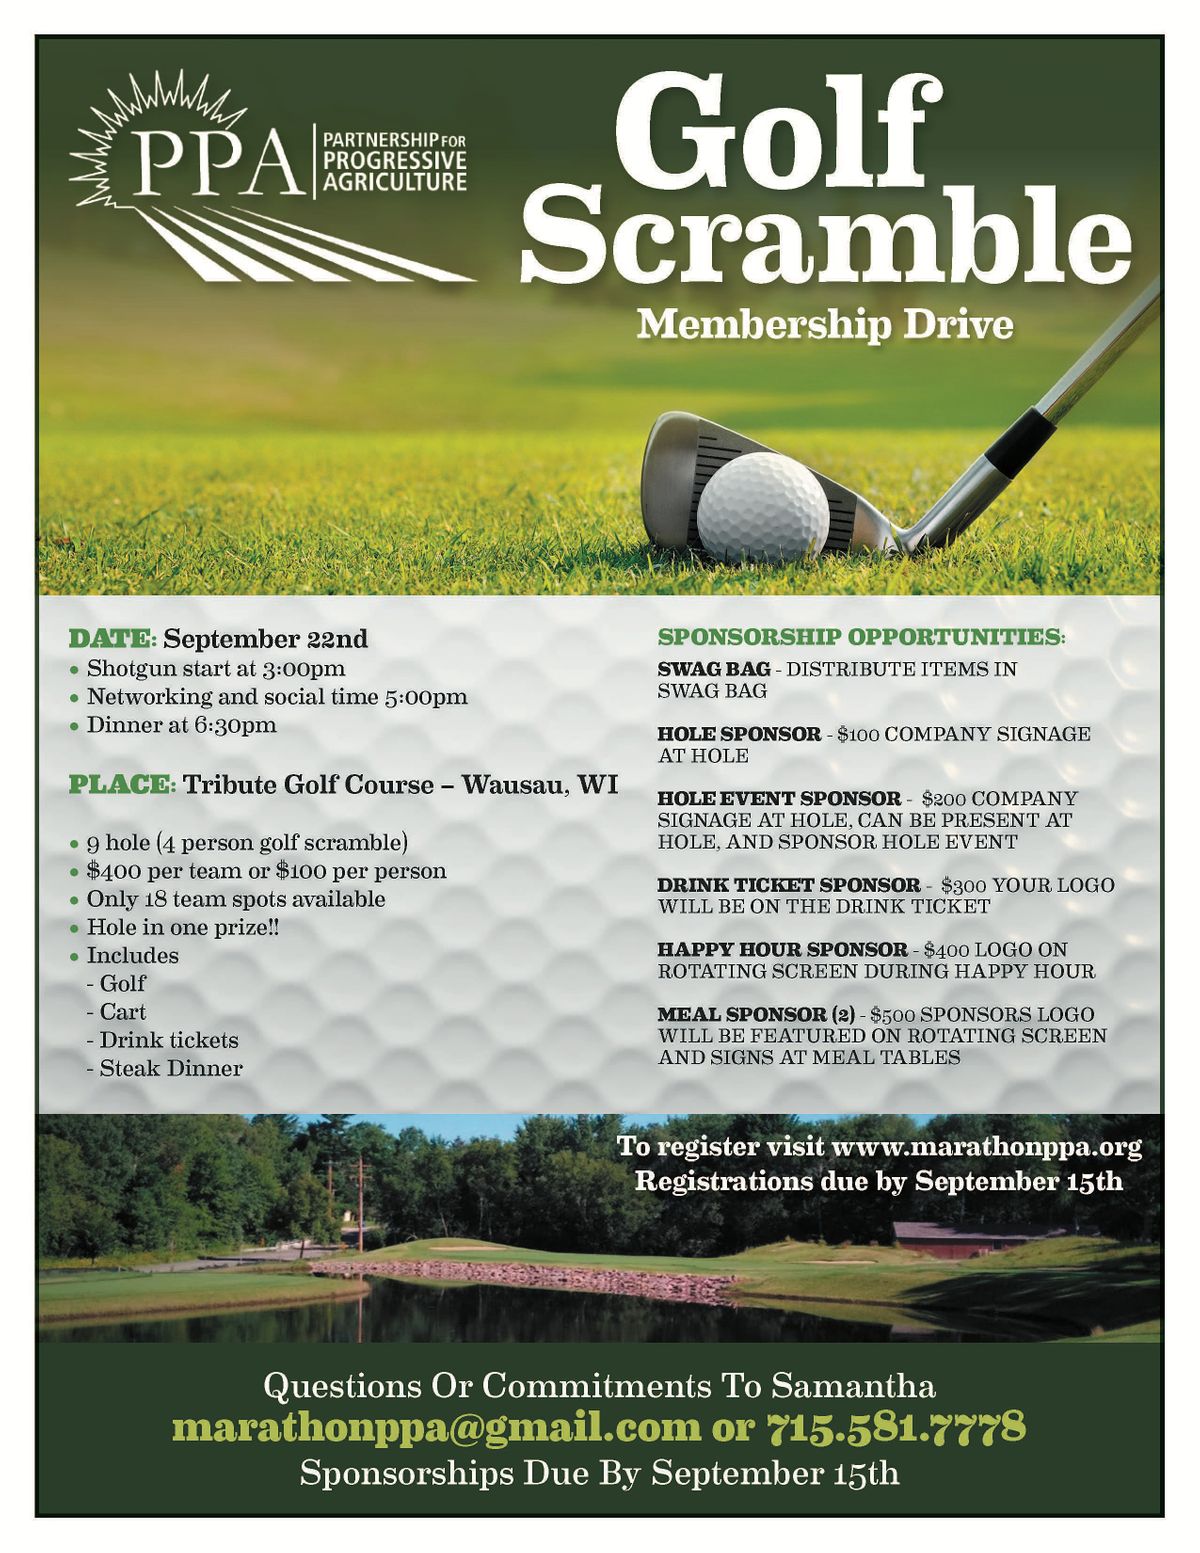 PPA Golf Scramble Membership Drive Bunkers Tribute Golf Course